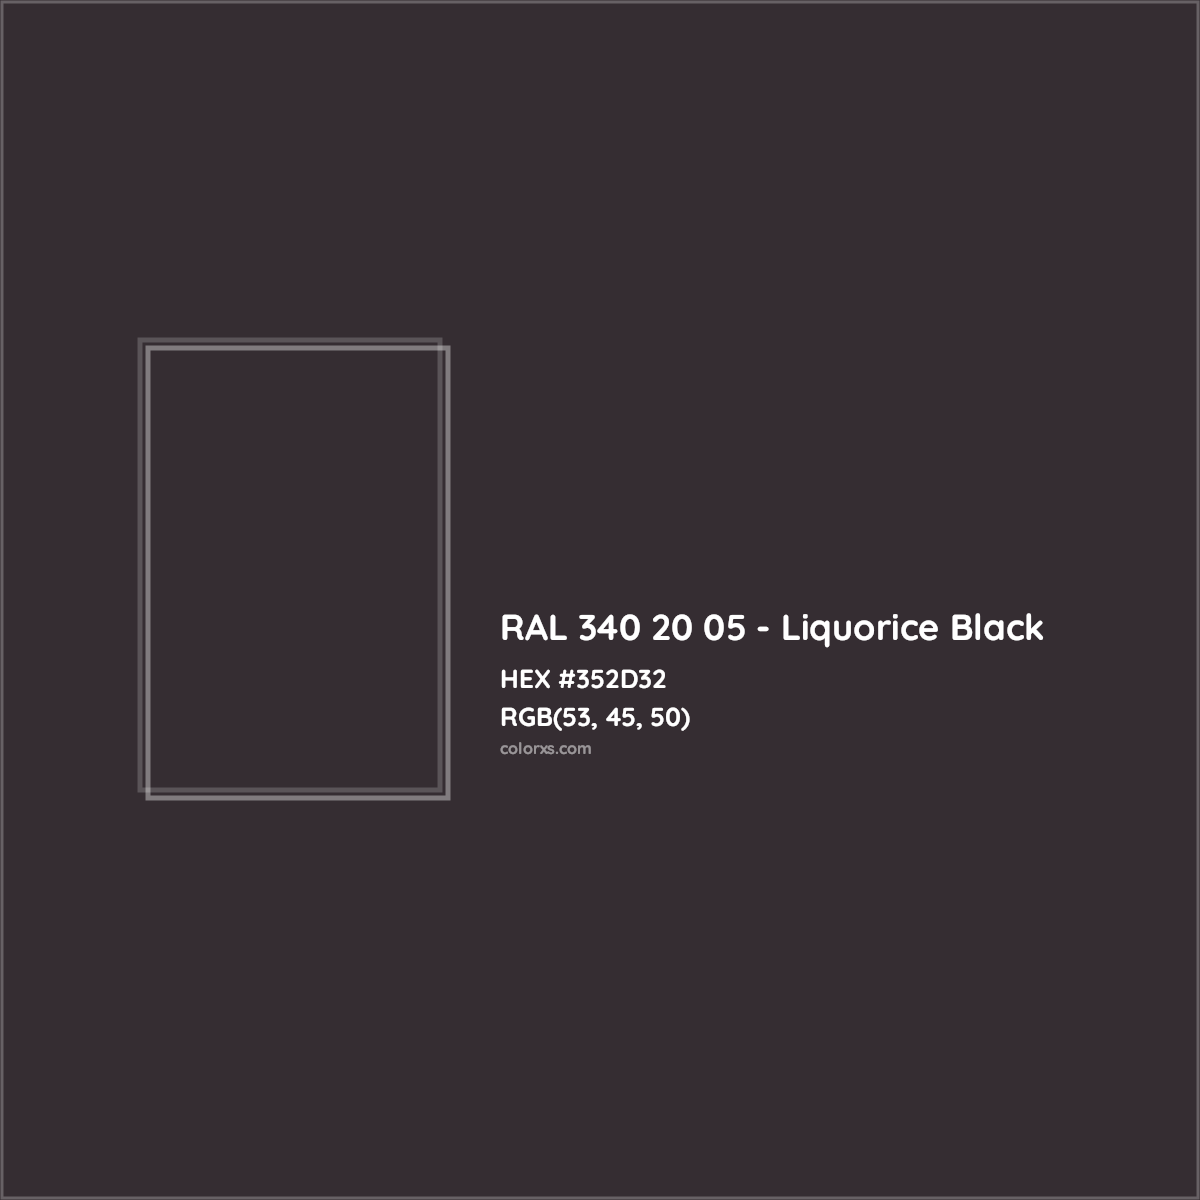 HEX #352D32 RAL 340 20 05 - Liquorice Black CMS RAL Design - Color Code